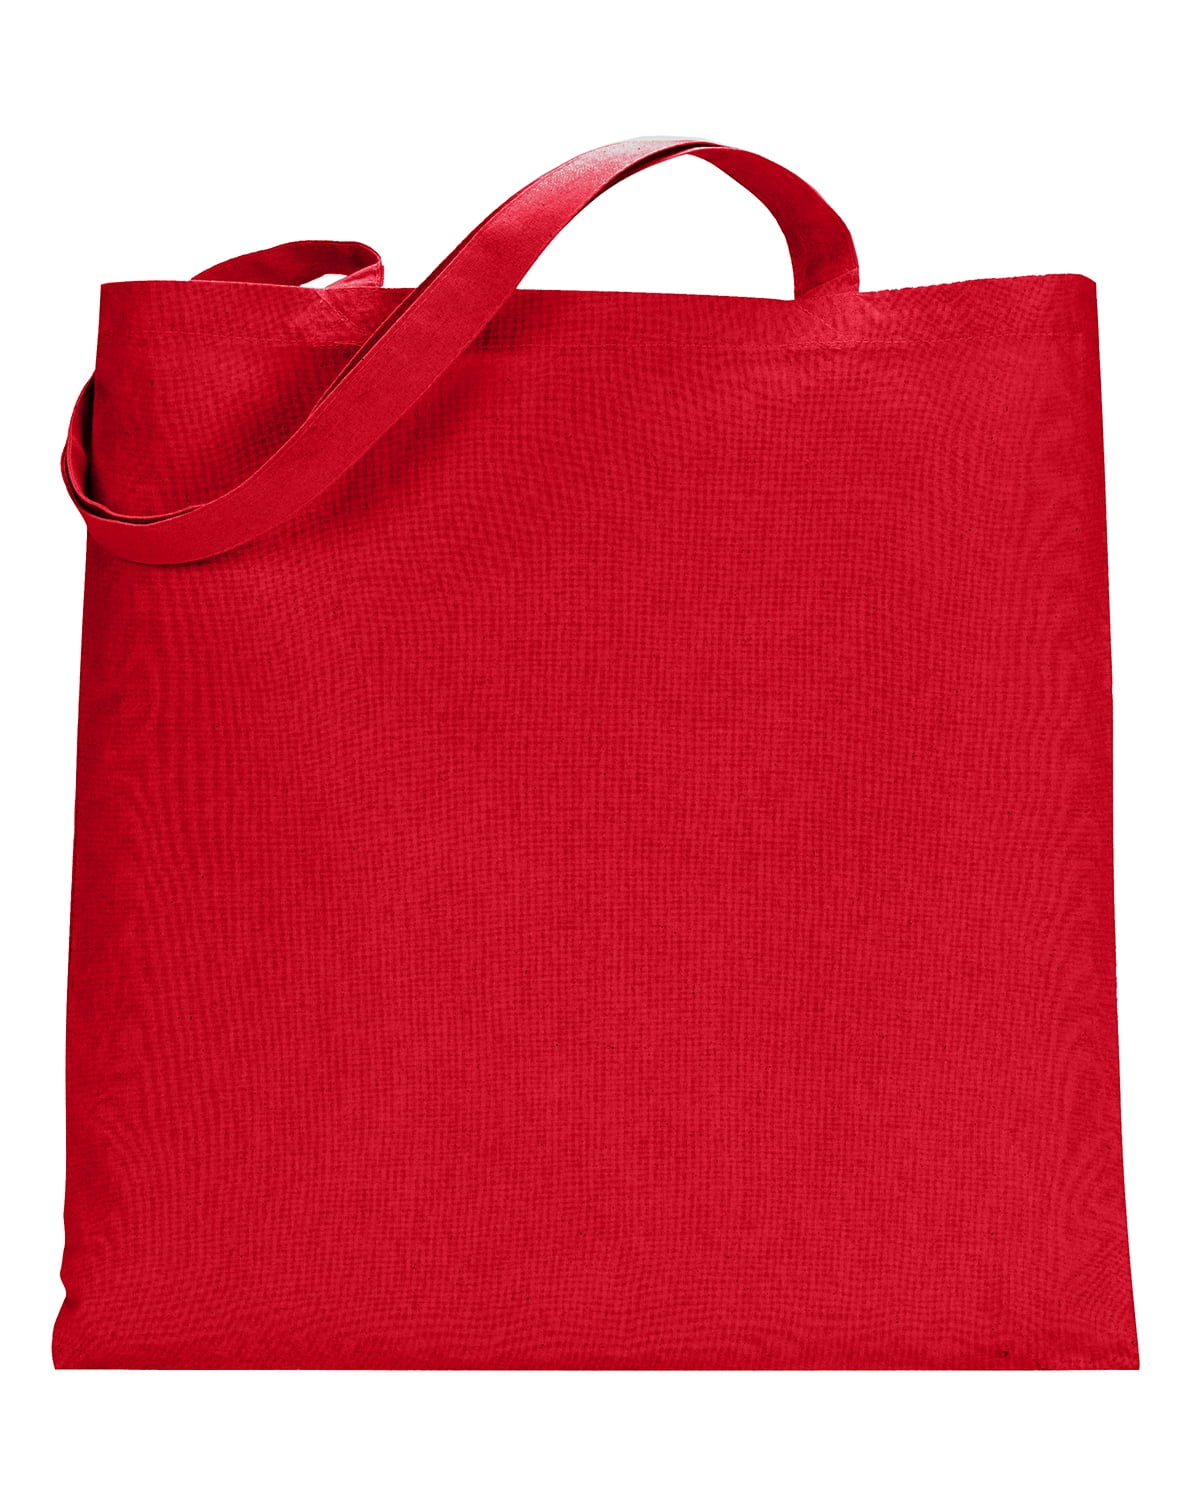 Women Silver Pleated Brand Logo Tote Bag 26 H x 45 L x 12 W cm, Red